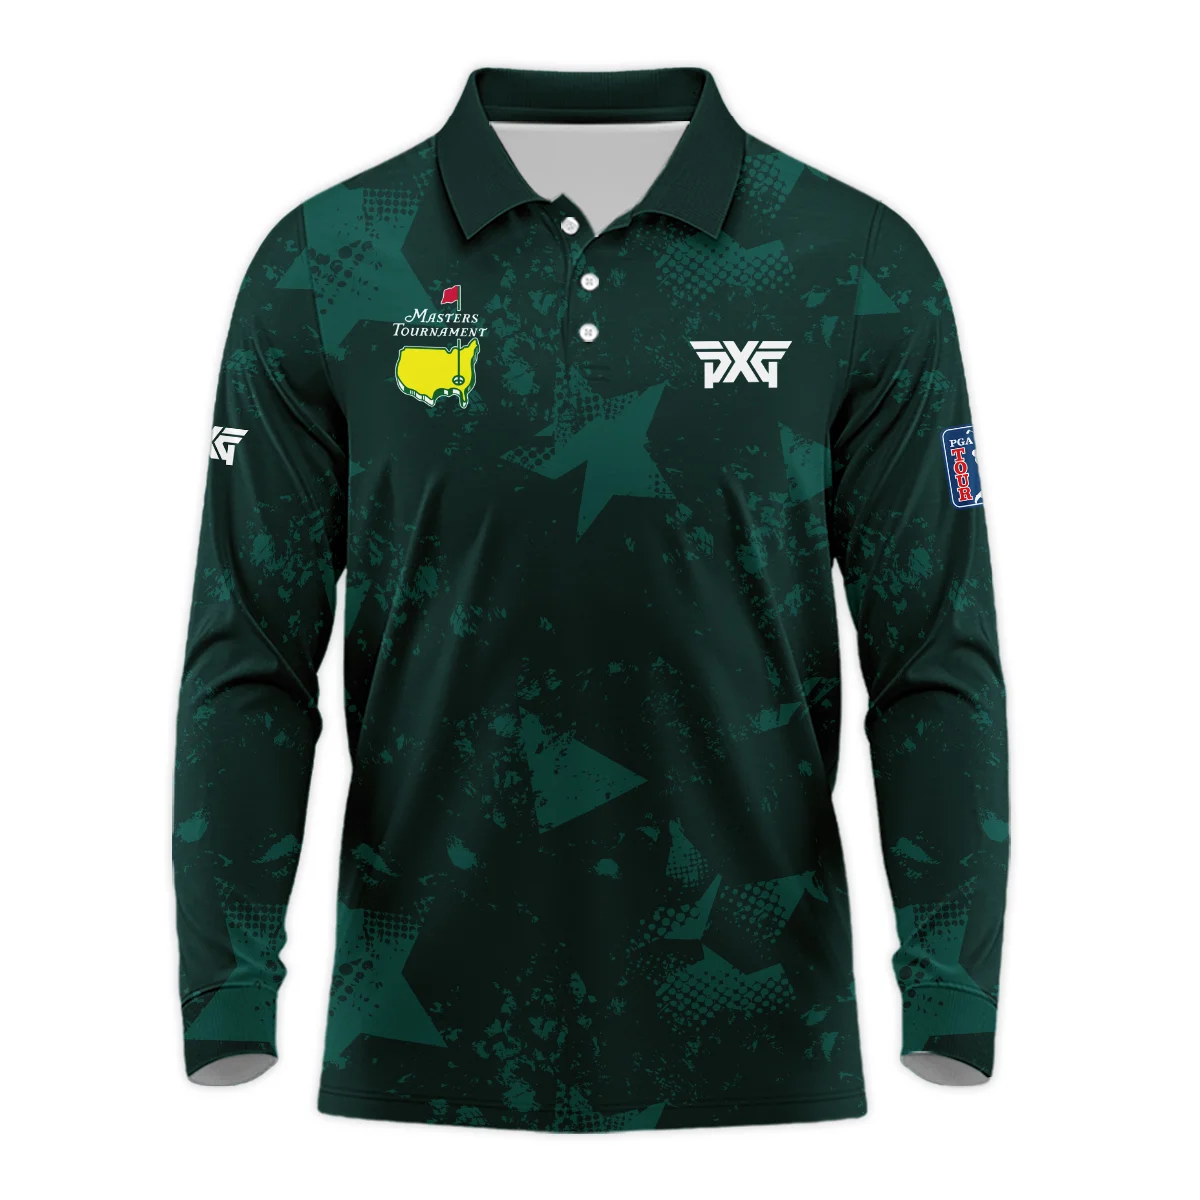 Dark Green Grunge Stars Pattern Golf Masters Tournament Sleeveless Jacket Style Classic Sleeveless Jacket